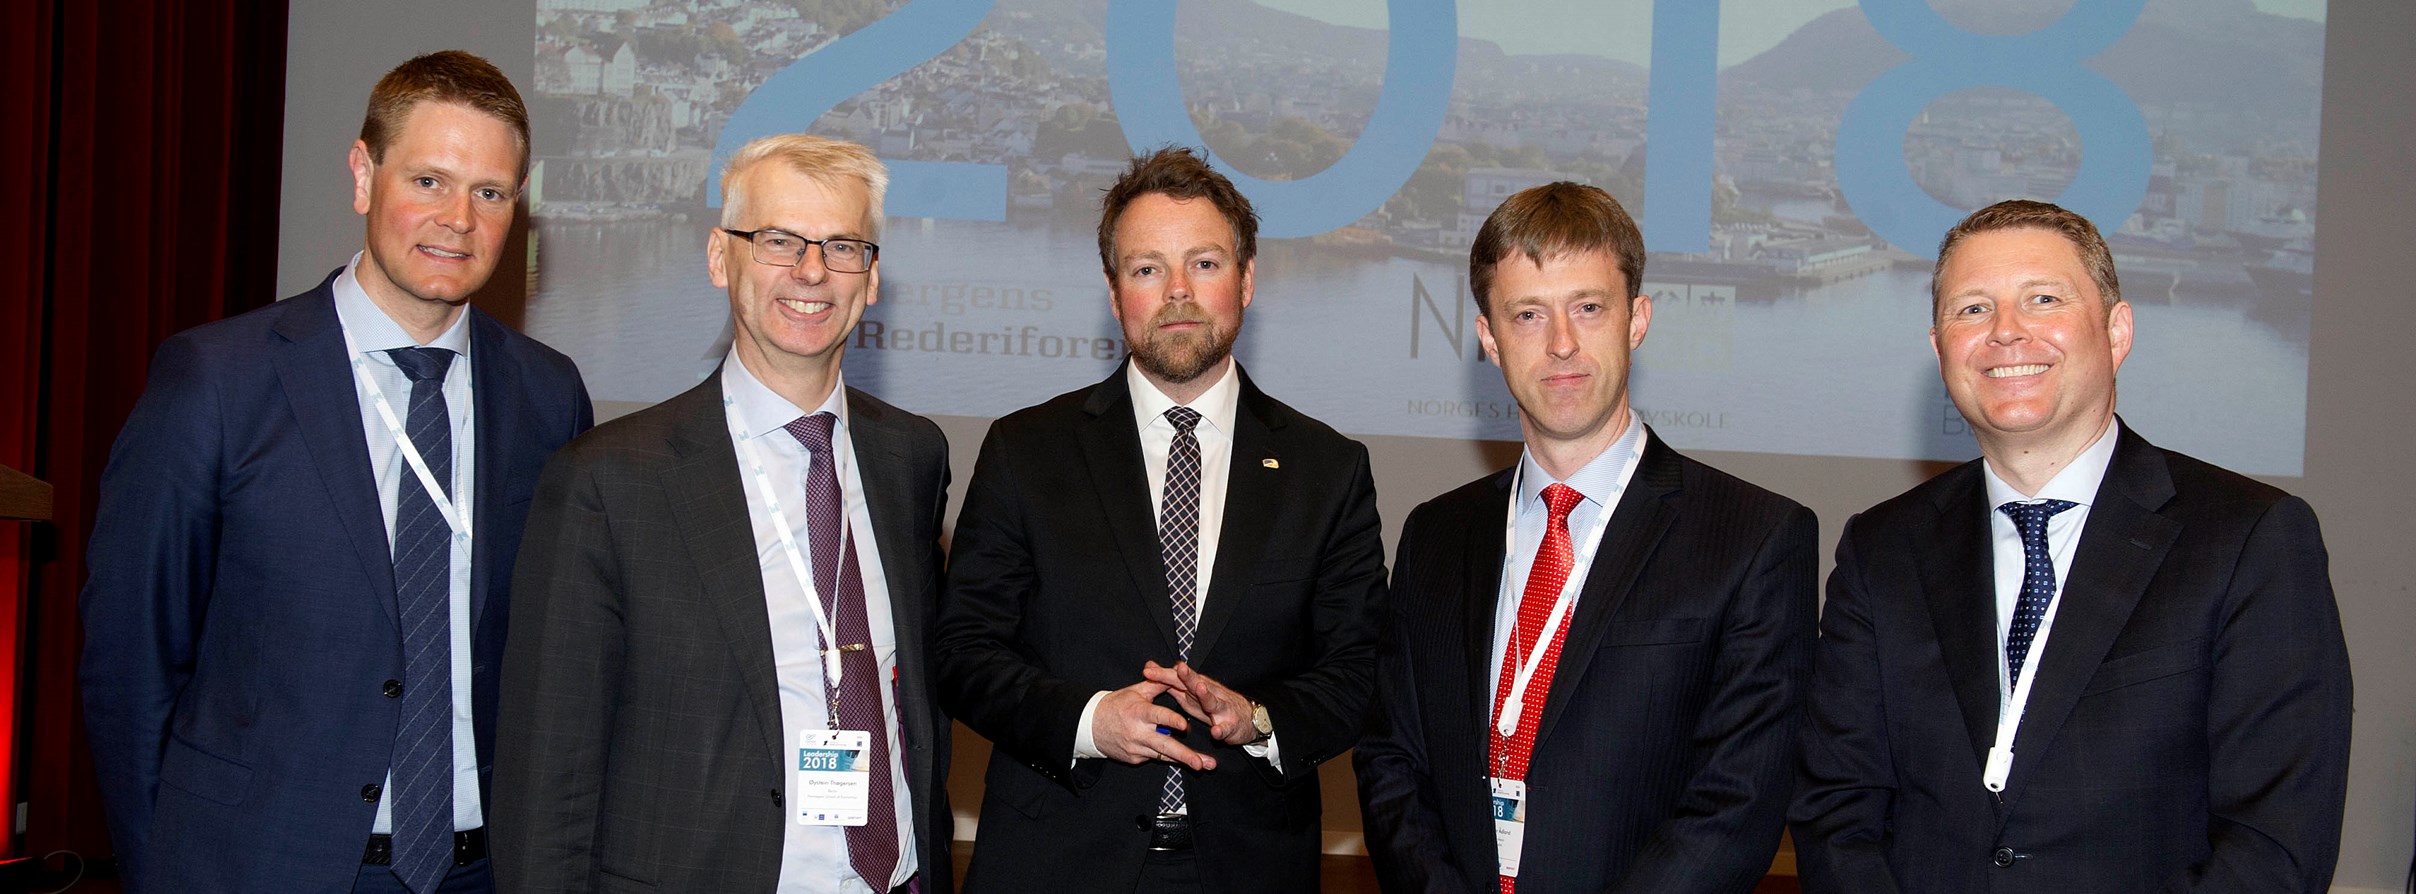 CEO Harald Solberg (Norwegian Shipowner´s Association), Rector Øystein Thøgersen (NHH), Minister of Trade and Industry Torbjørn Røe Isaksen, Professor Roar Os Ådland (NHH) and Chairman Geir Mjelde (Bergens Rederiforening).